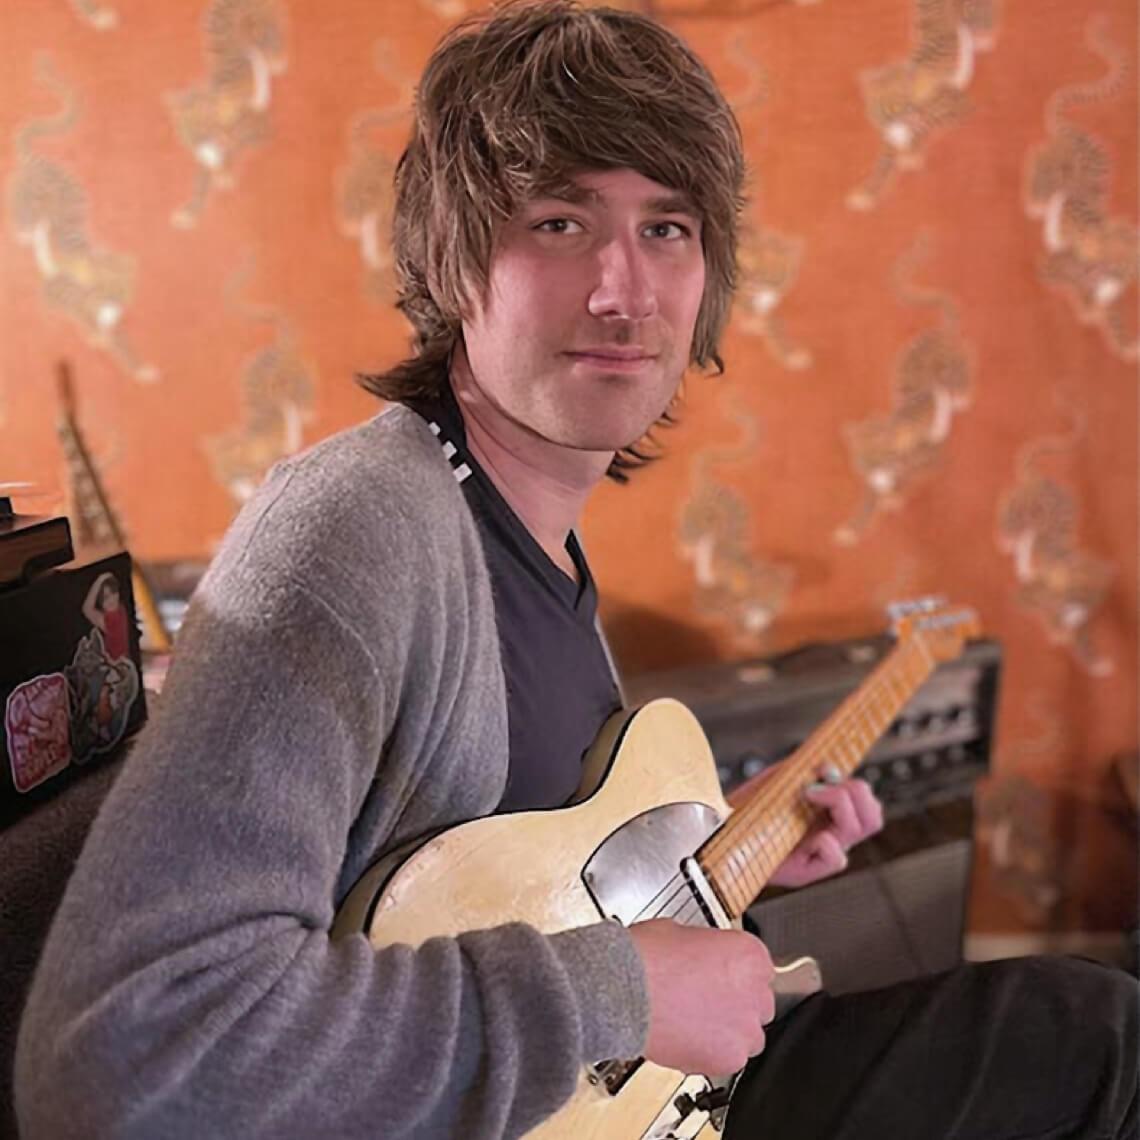 Ryan Devlin playing a Fender Telecaster guitar